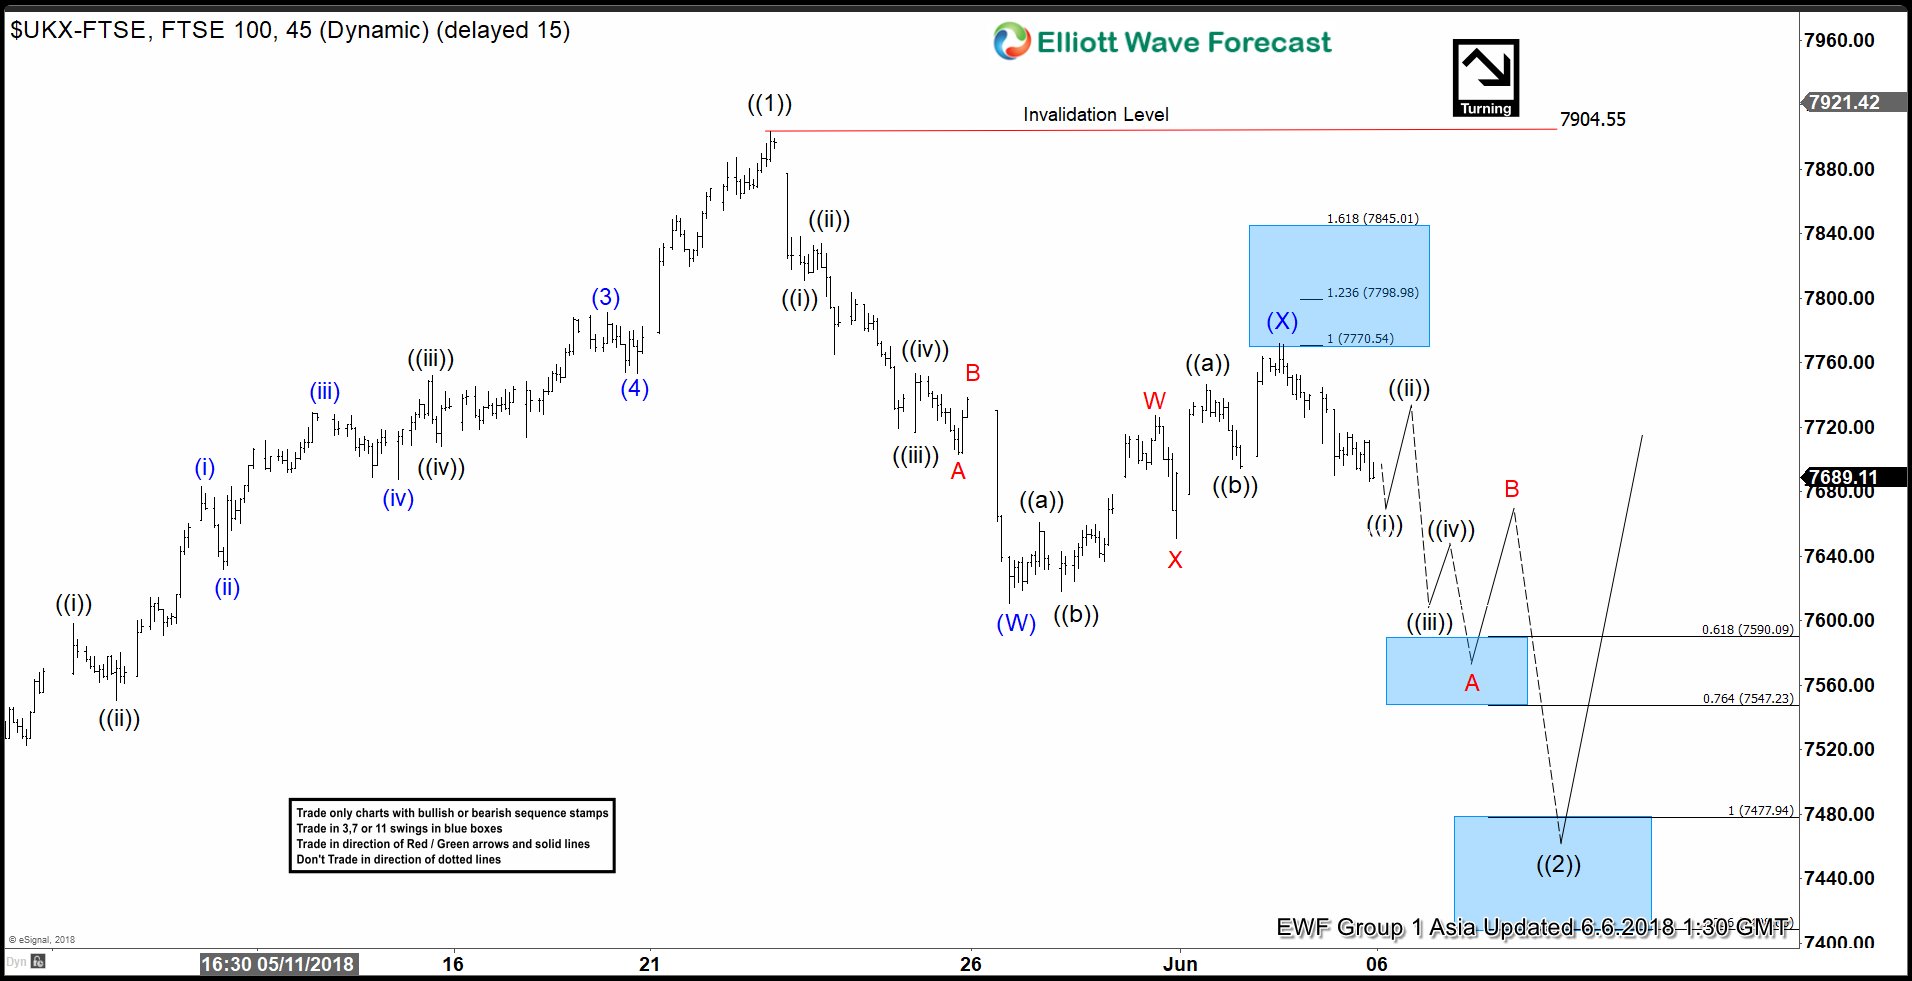 FTSE Elliott Wave View: Buying Opportunity Soon